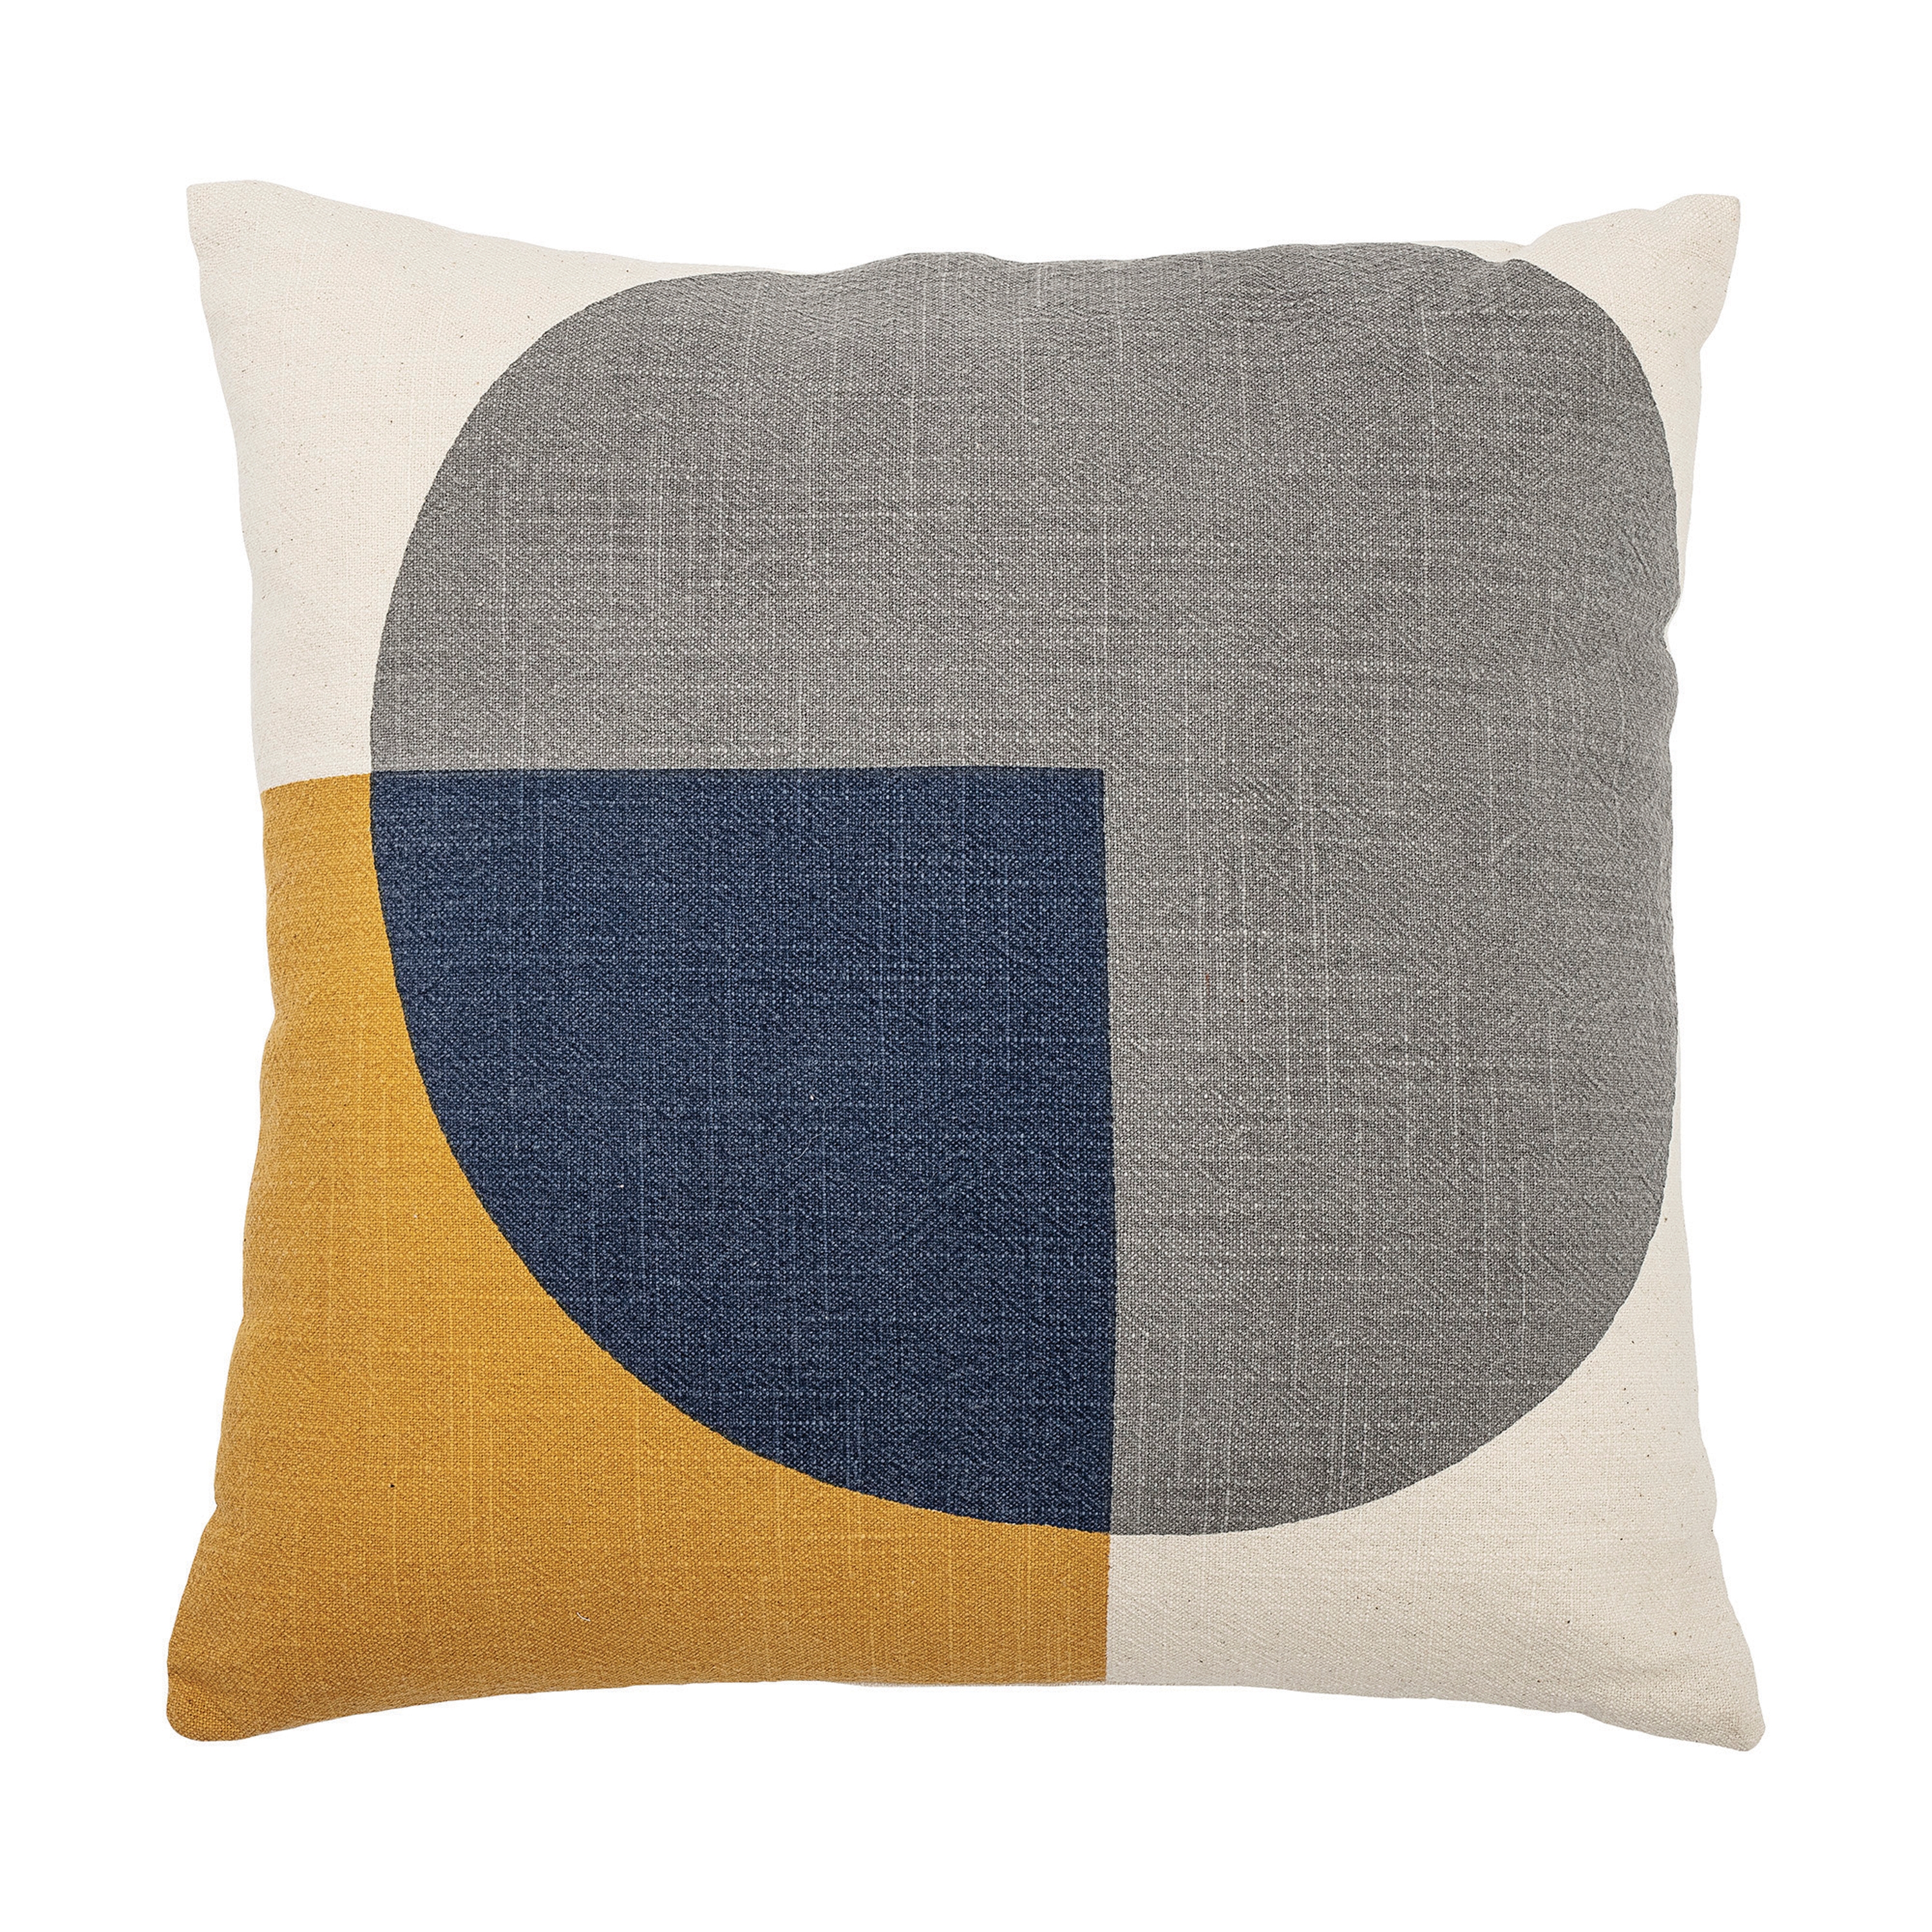 Geometric Printed Cotton Pillow, Mustard & Blue, 16" x 16" - Image 0